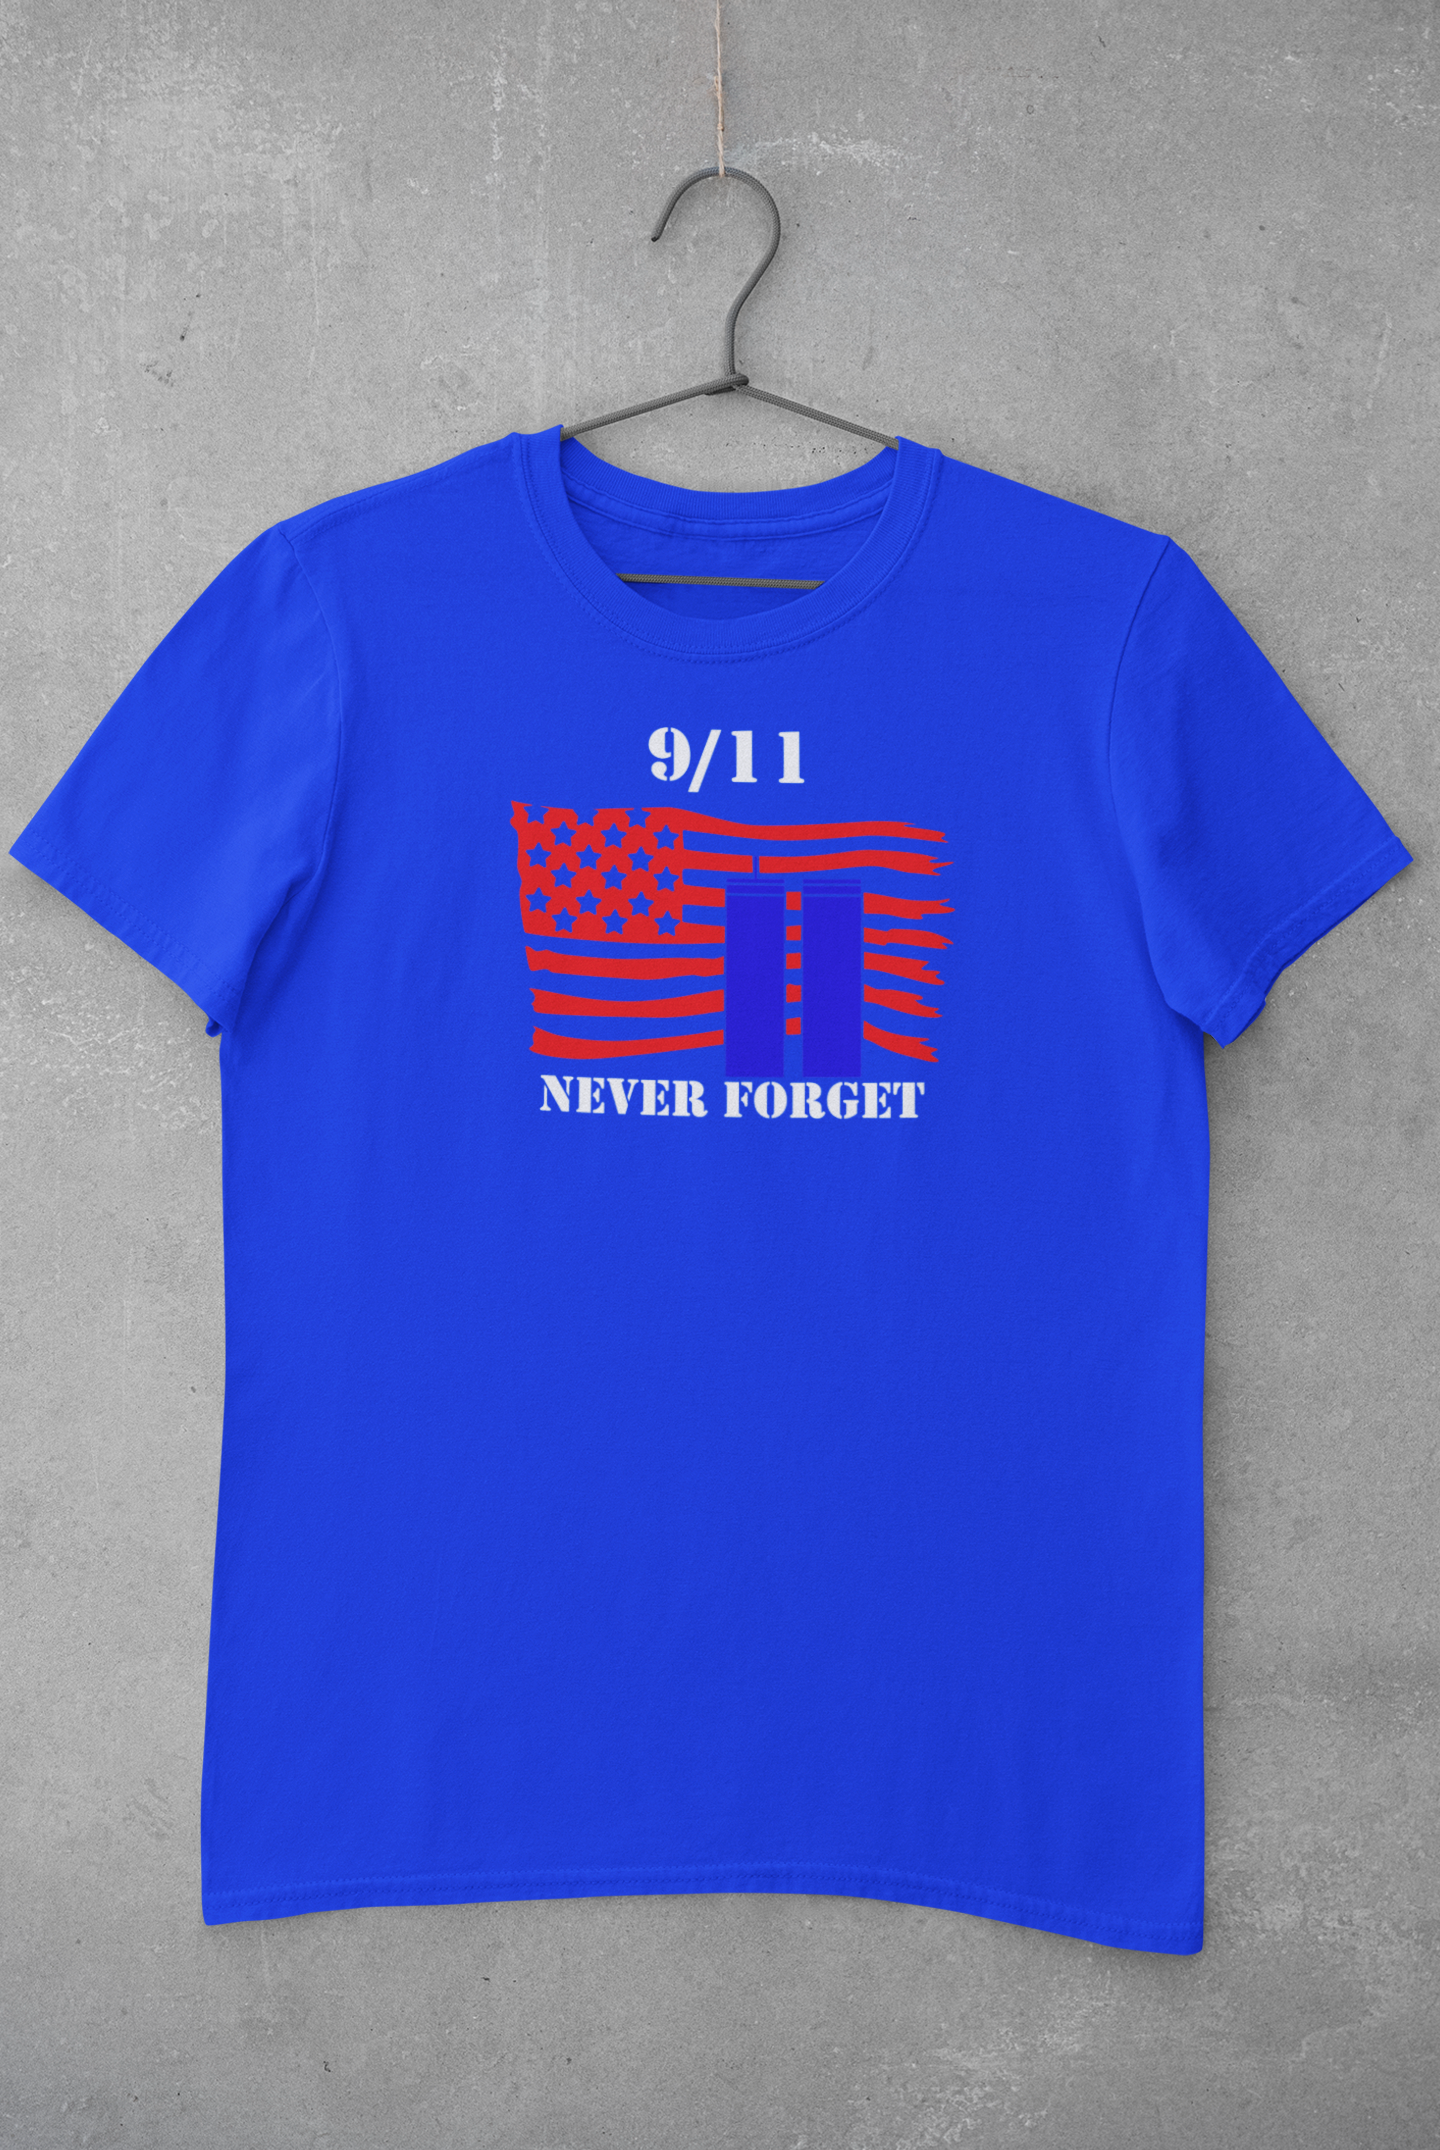 September 11th - 9/11 Adult Man/Woman Short Sleeve T-shirt